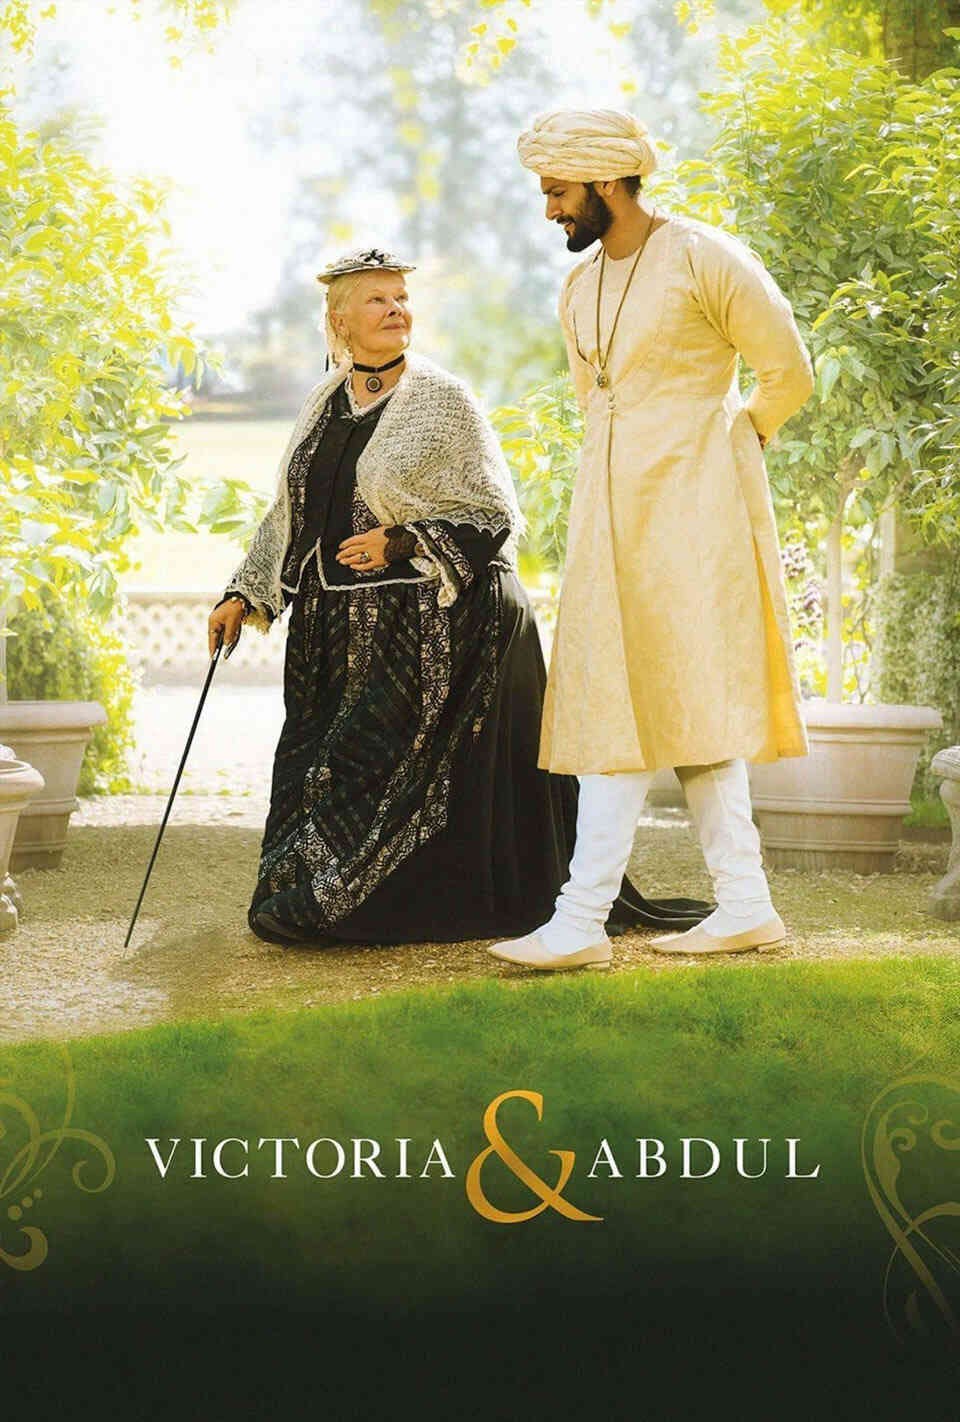 Read Victoria & Abdul screenplay (poster)